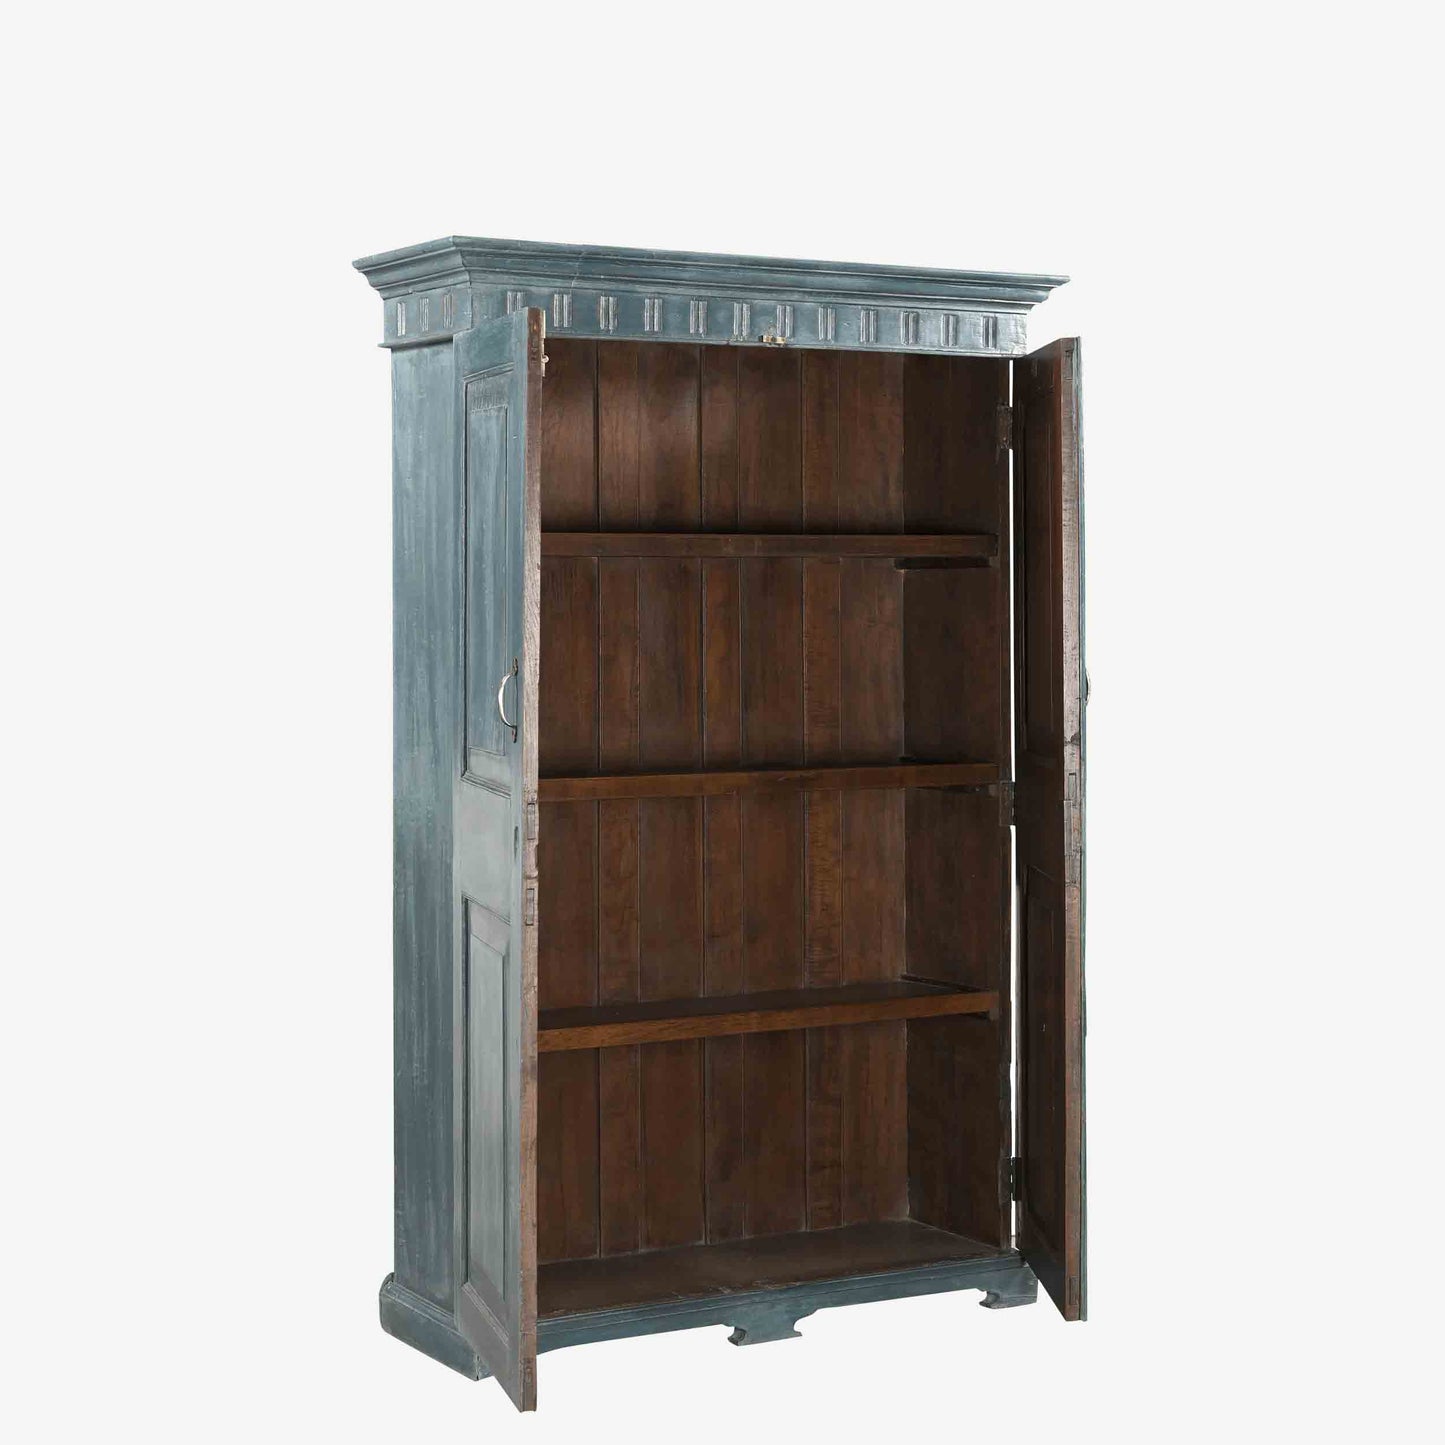 The Welles Antique Cupboard Dresser in Baltimore Blue